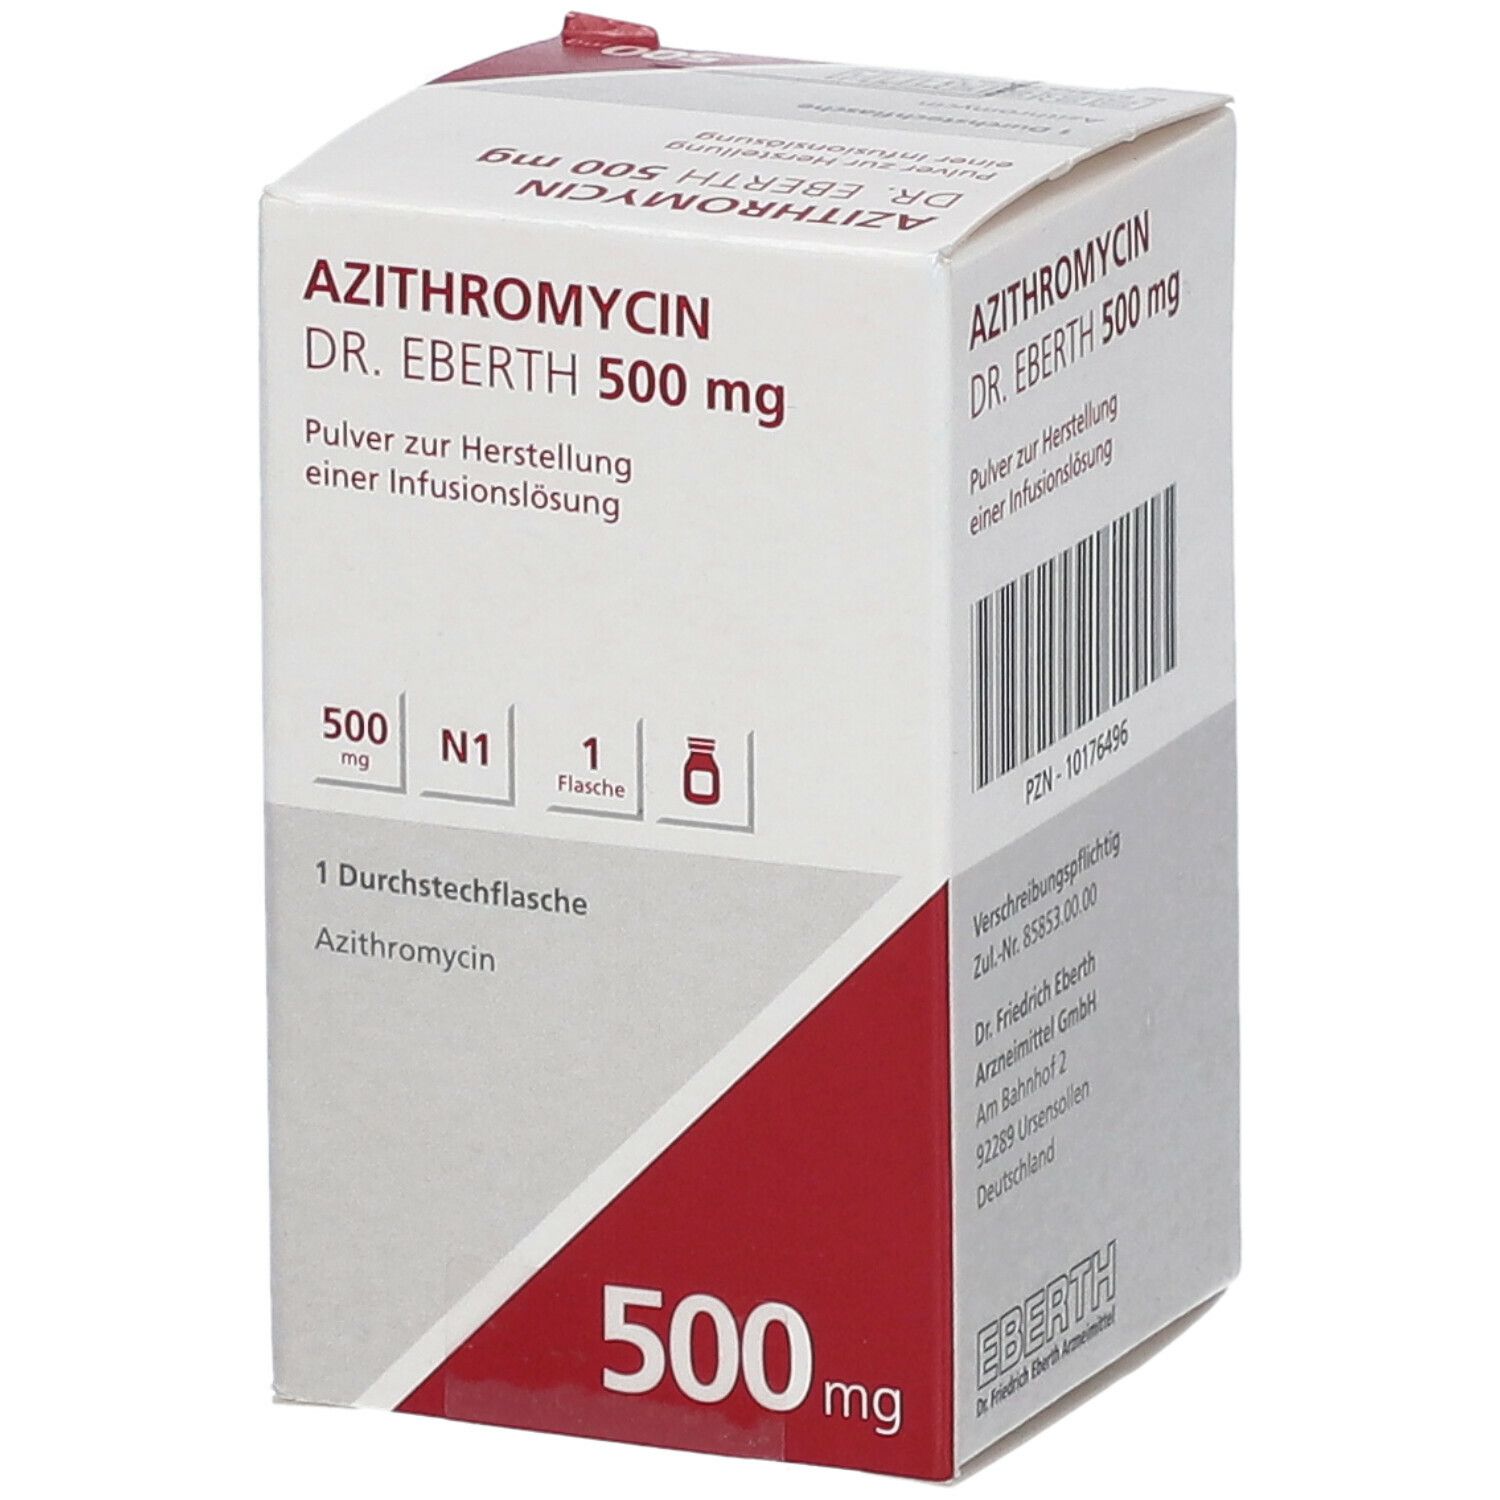 AZITHROMYCIN DR. EBERTH 500 mg